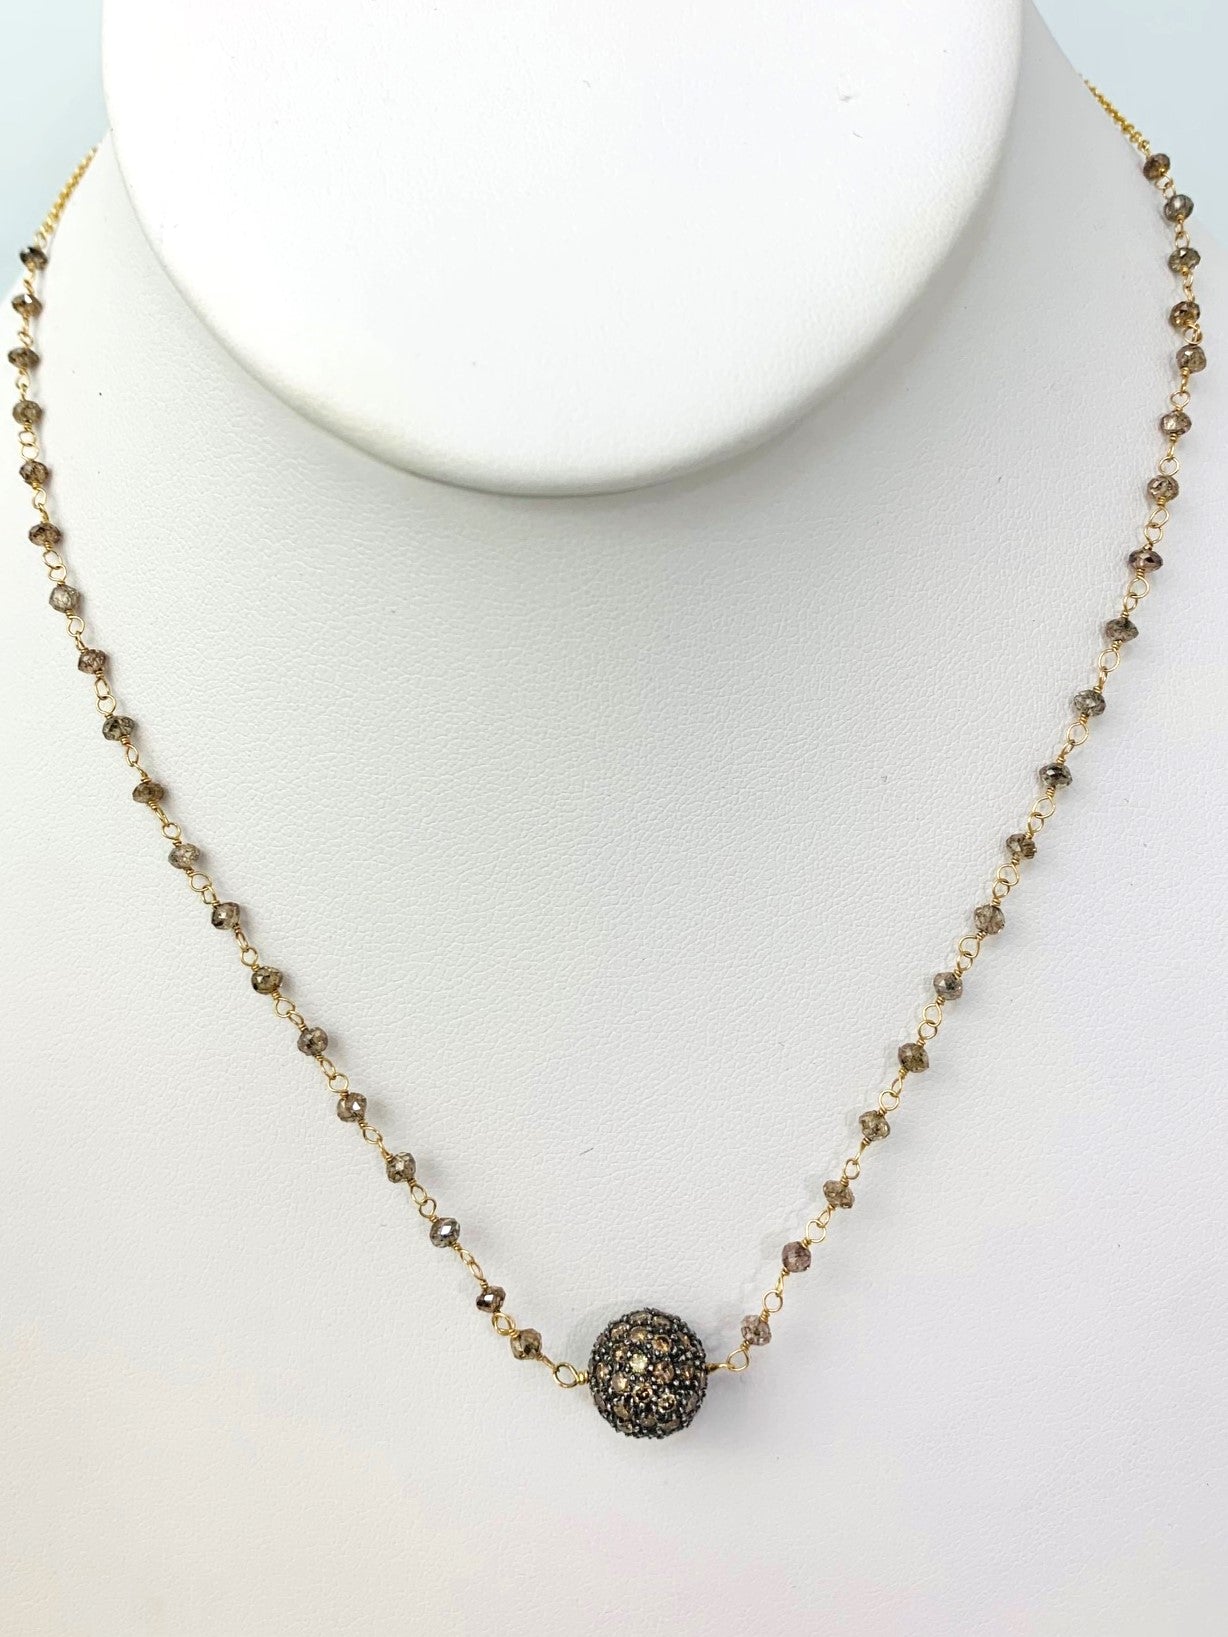 16" Brown Diamond Rosary Necklace With Blackened Silver Pave Diamond Ball Center in 14KY, SS - NCK-389-DCOROSDIA14YSS-BRN-16 7ctw